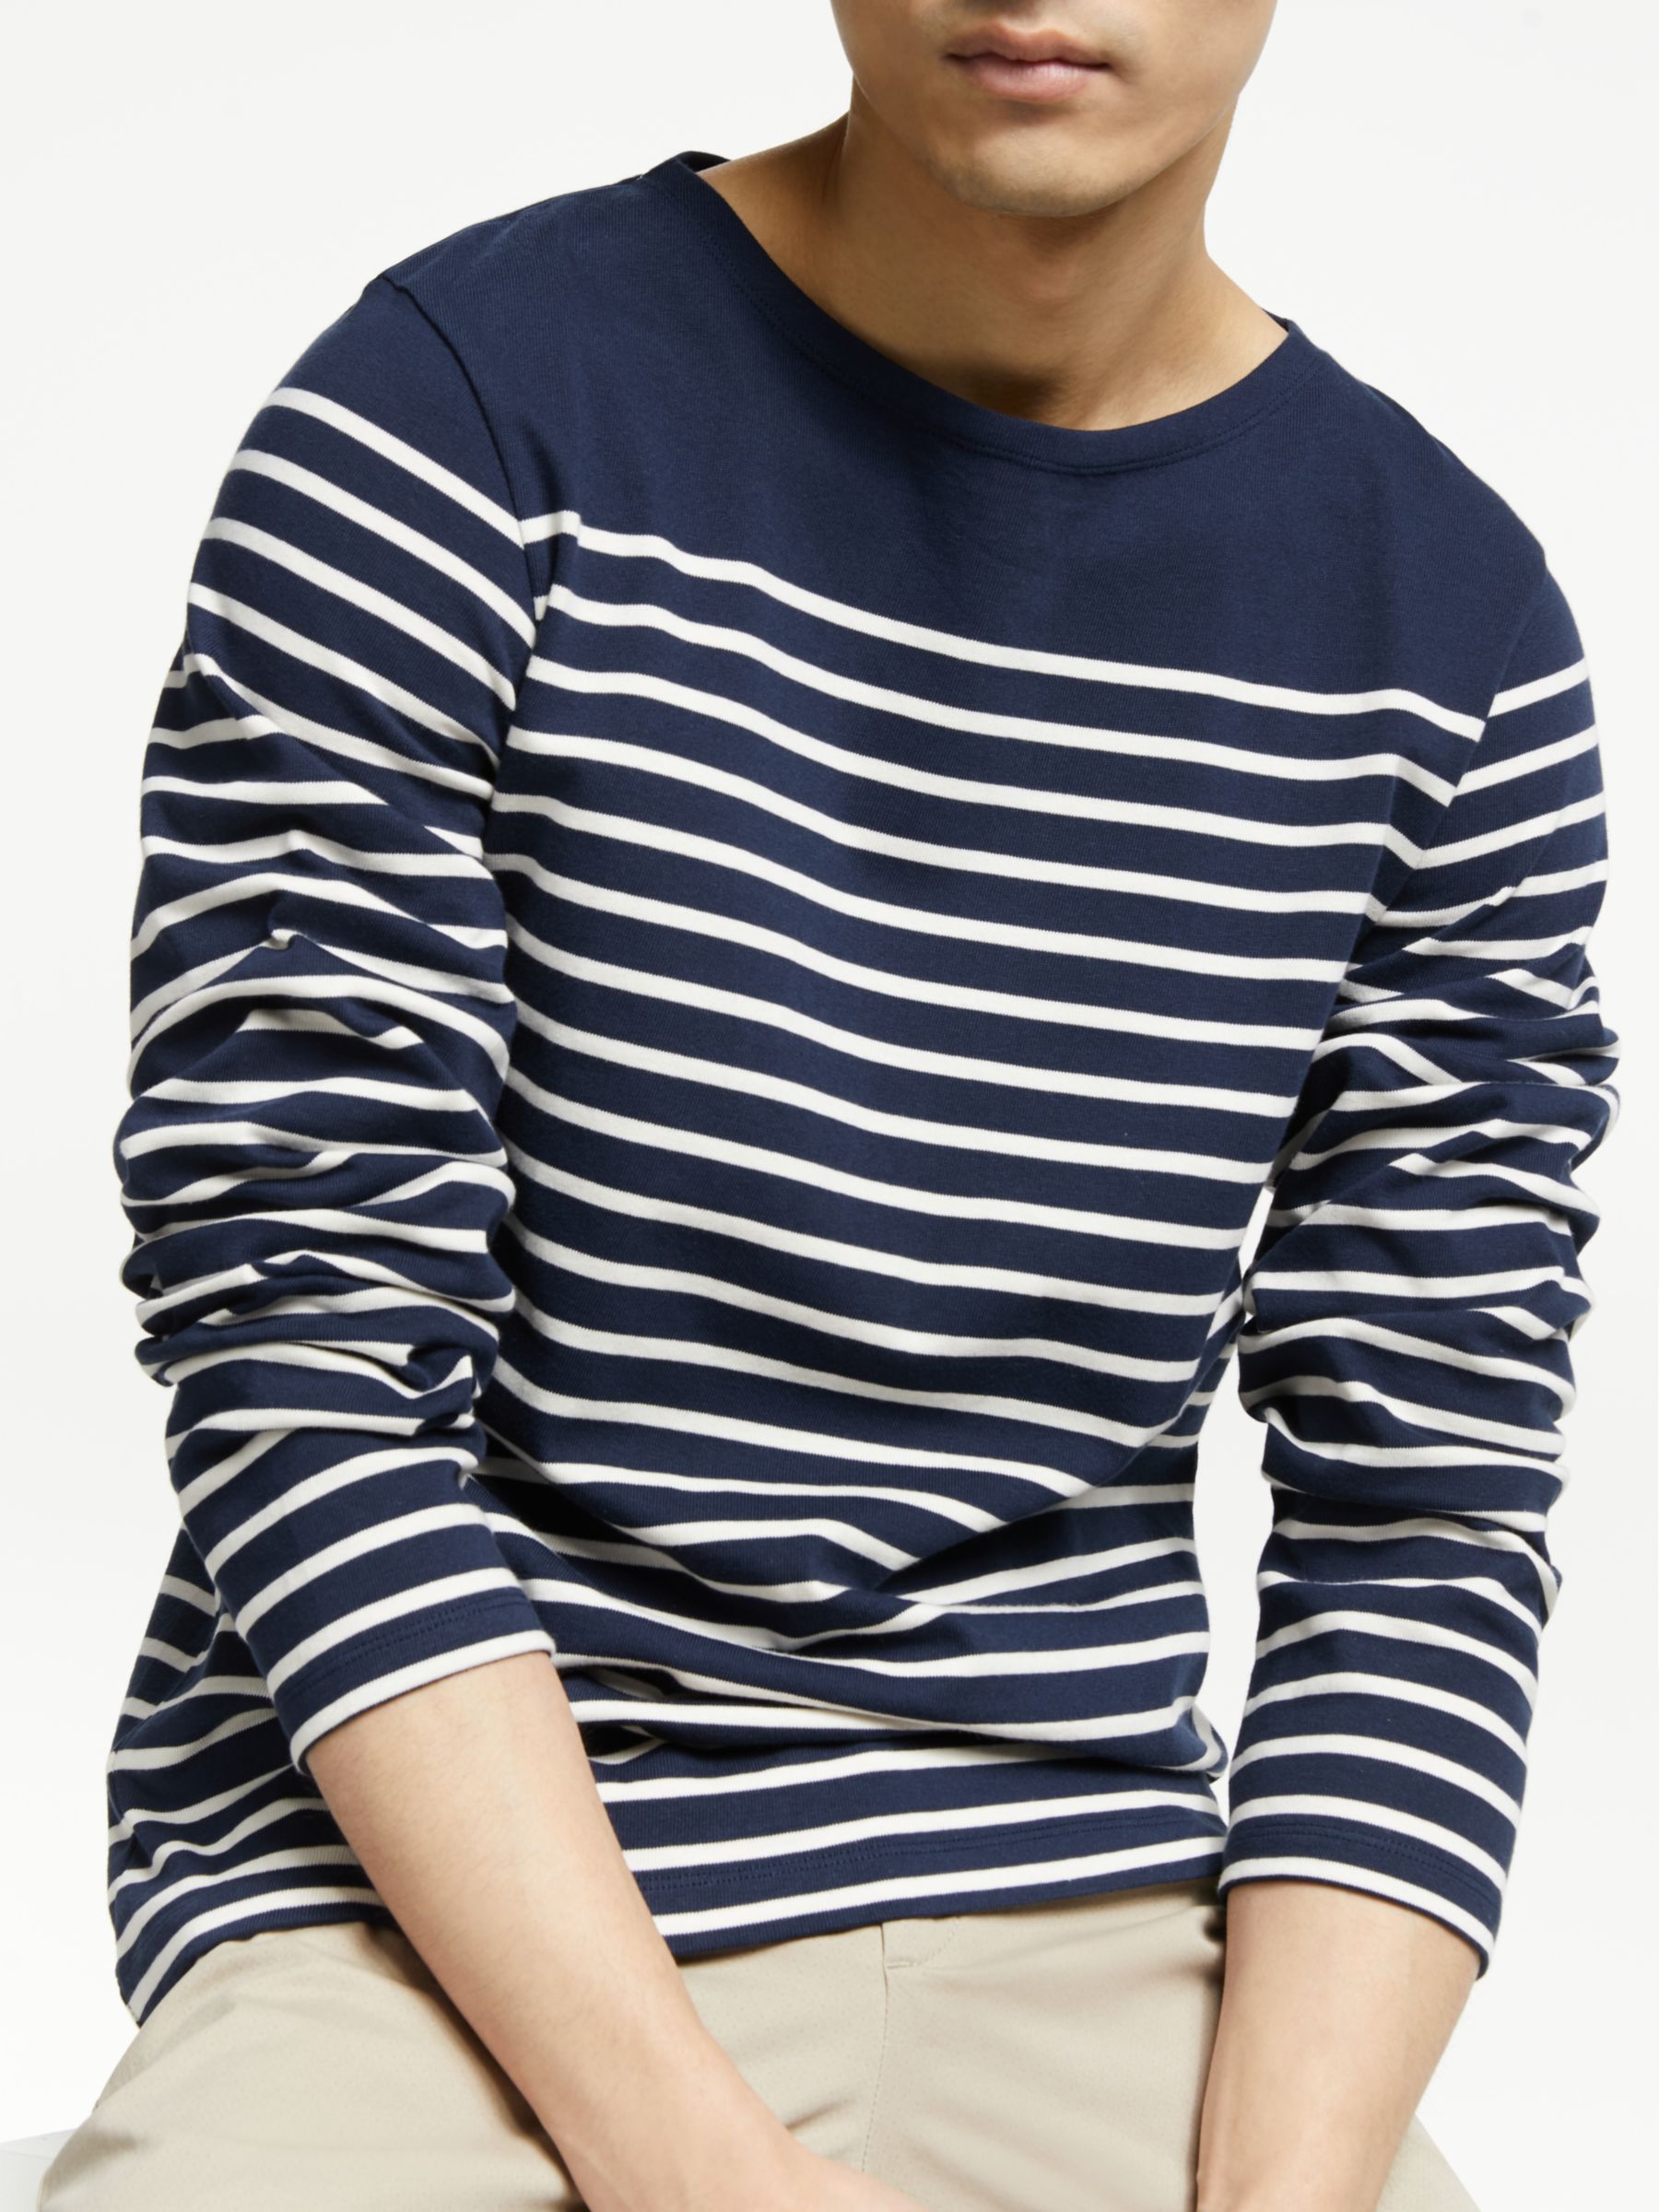 John Lewis & Partners Cotton Long Sleeve Breton Stripe T-Shirt